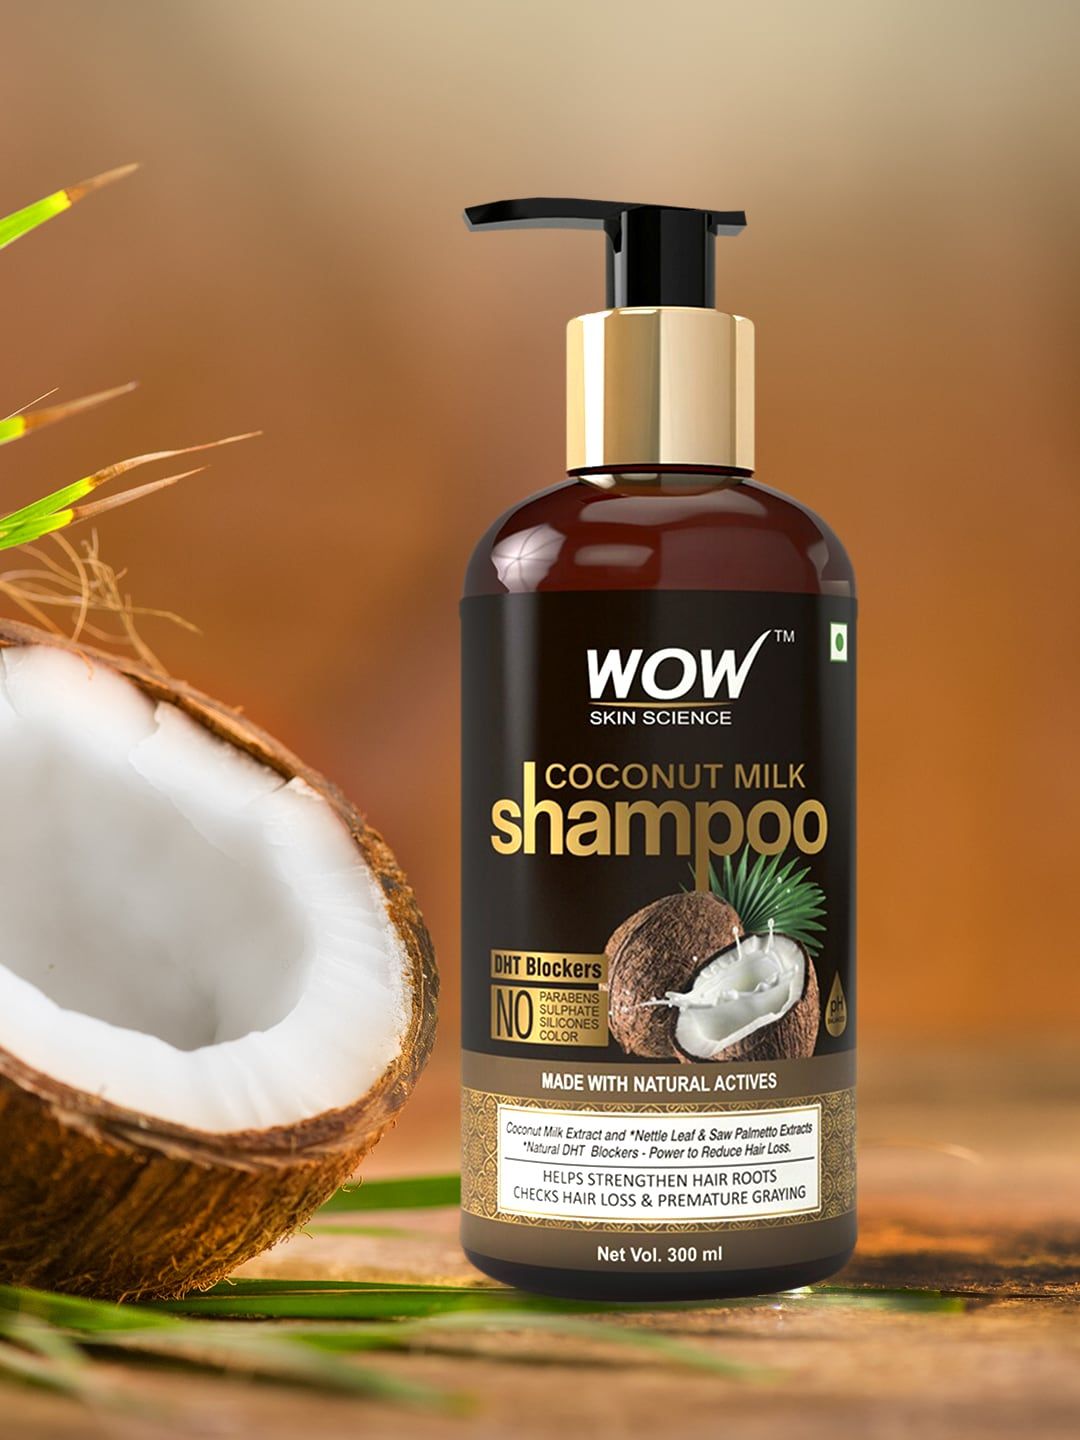 WOW Skin Science Coconut Milk Shampoo 300 ml Price in India